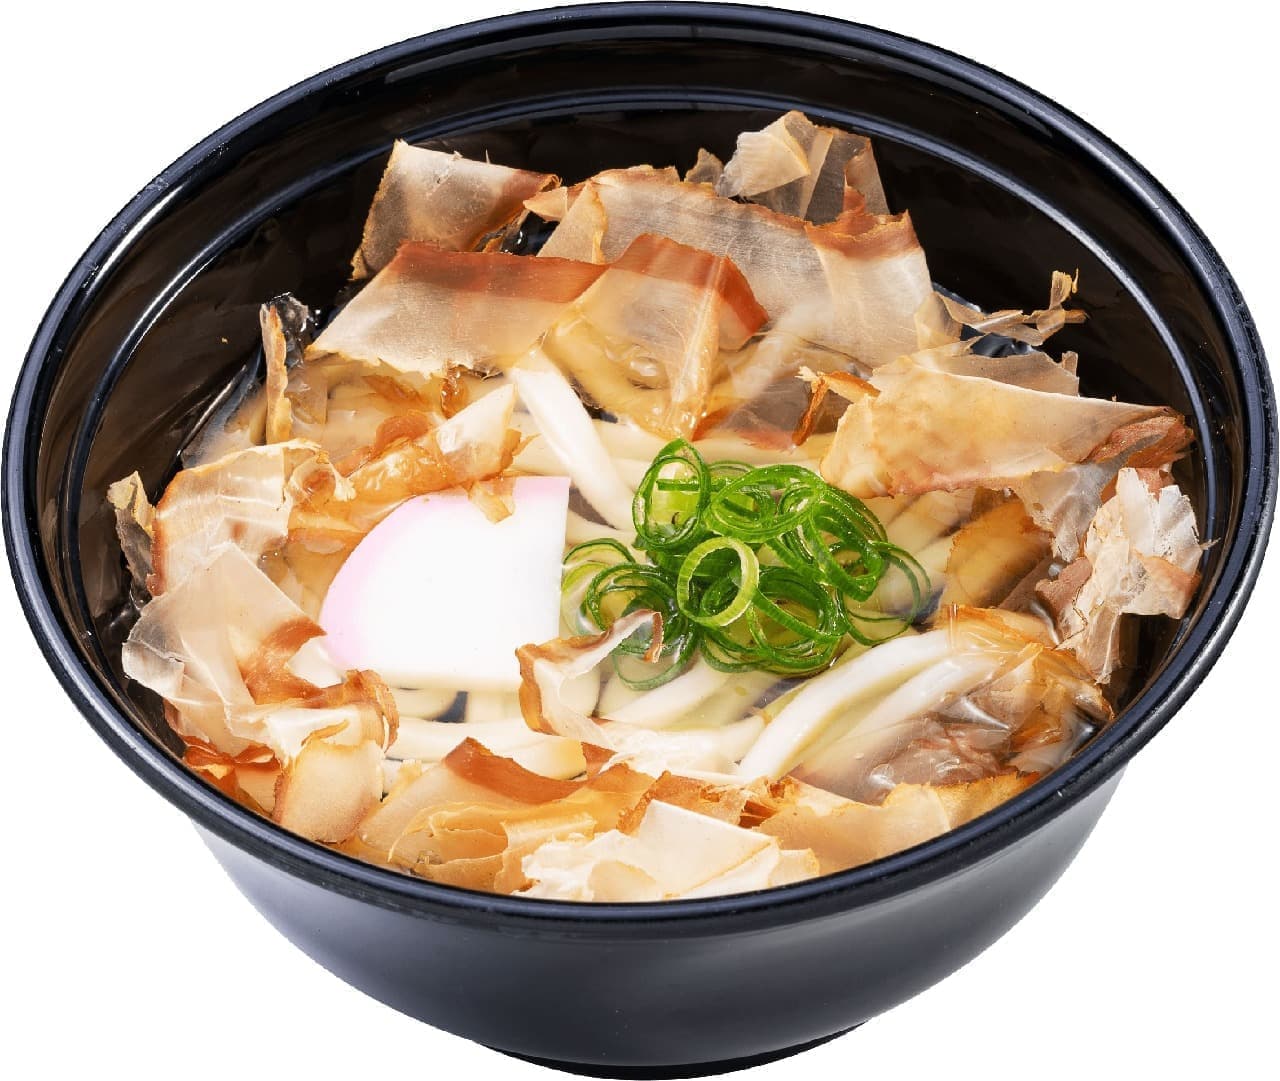 Kappa Sushi "Kake Udon" with aroma of tuna joints